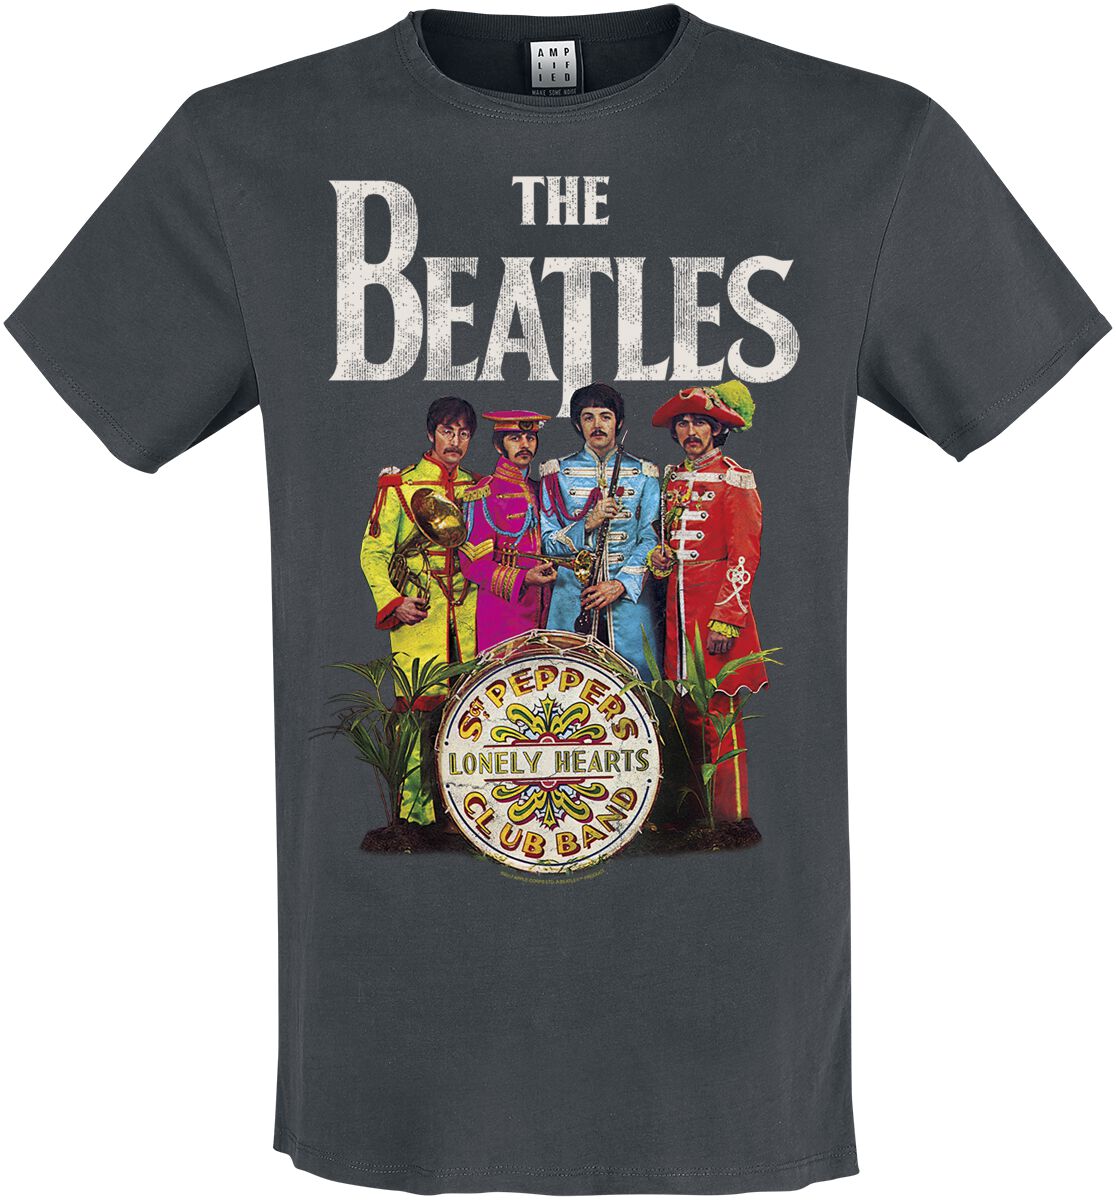 The Beatles T-Shirt - Amplified Collection - Lonely Hearts - M bis XXL - für Männer - Größe M - charcoal  - Lizenziertes Merchandise!